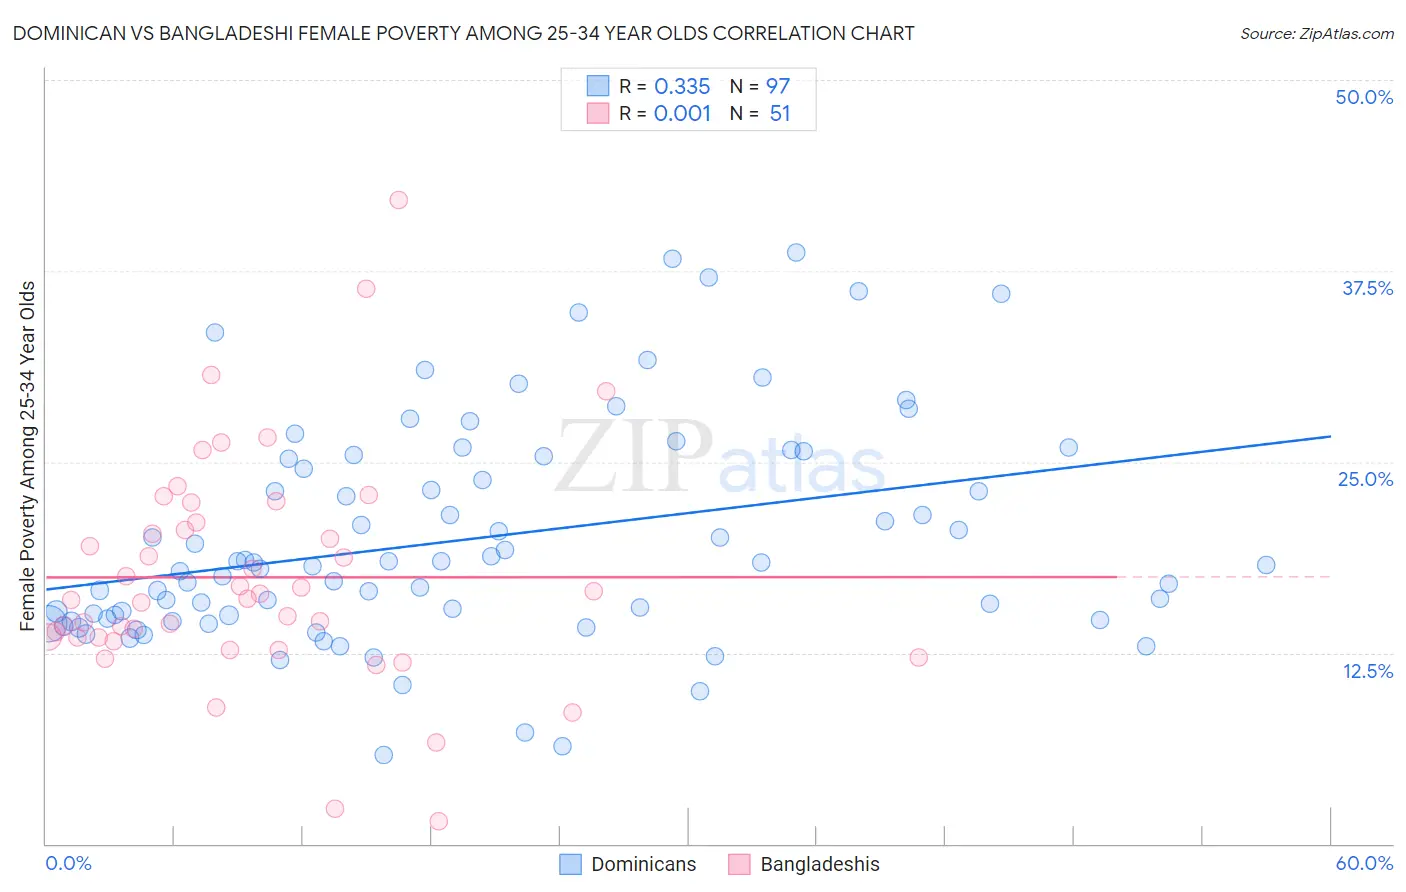 Dominican vs Bangladeshi Female Poverty Among 25-34 Year Olds